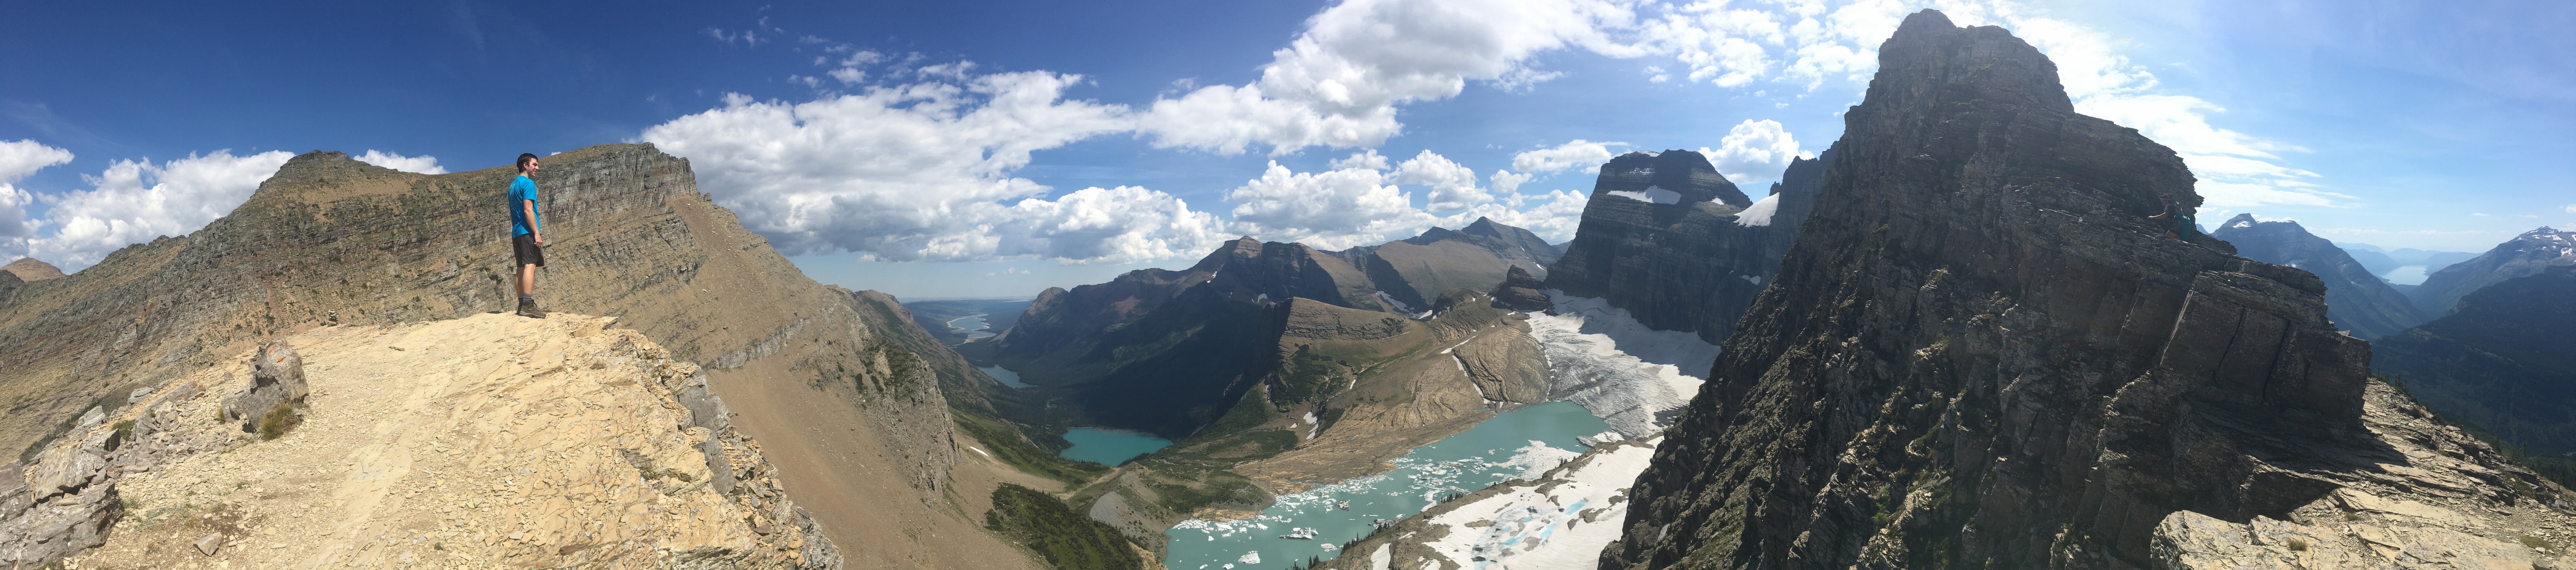 tetons yellowstone glacier 2016 trip report